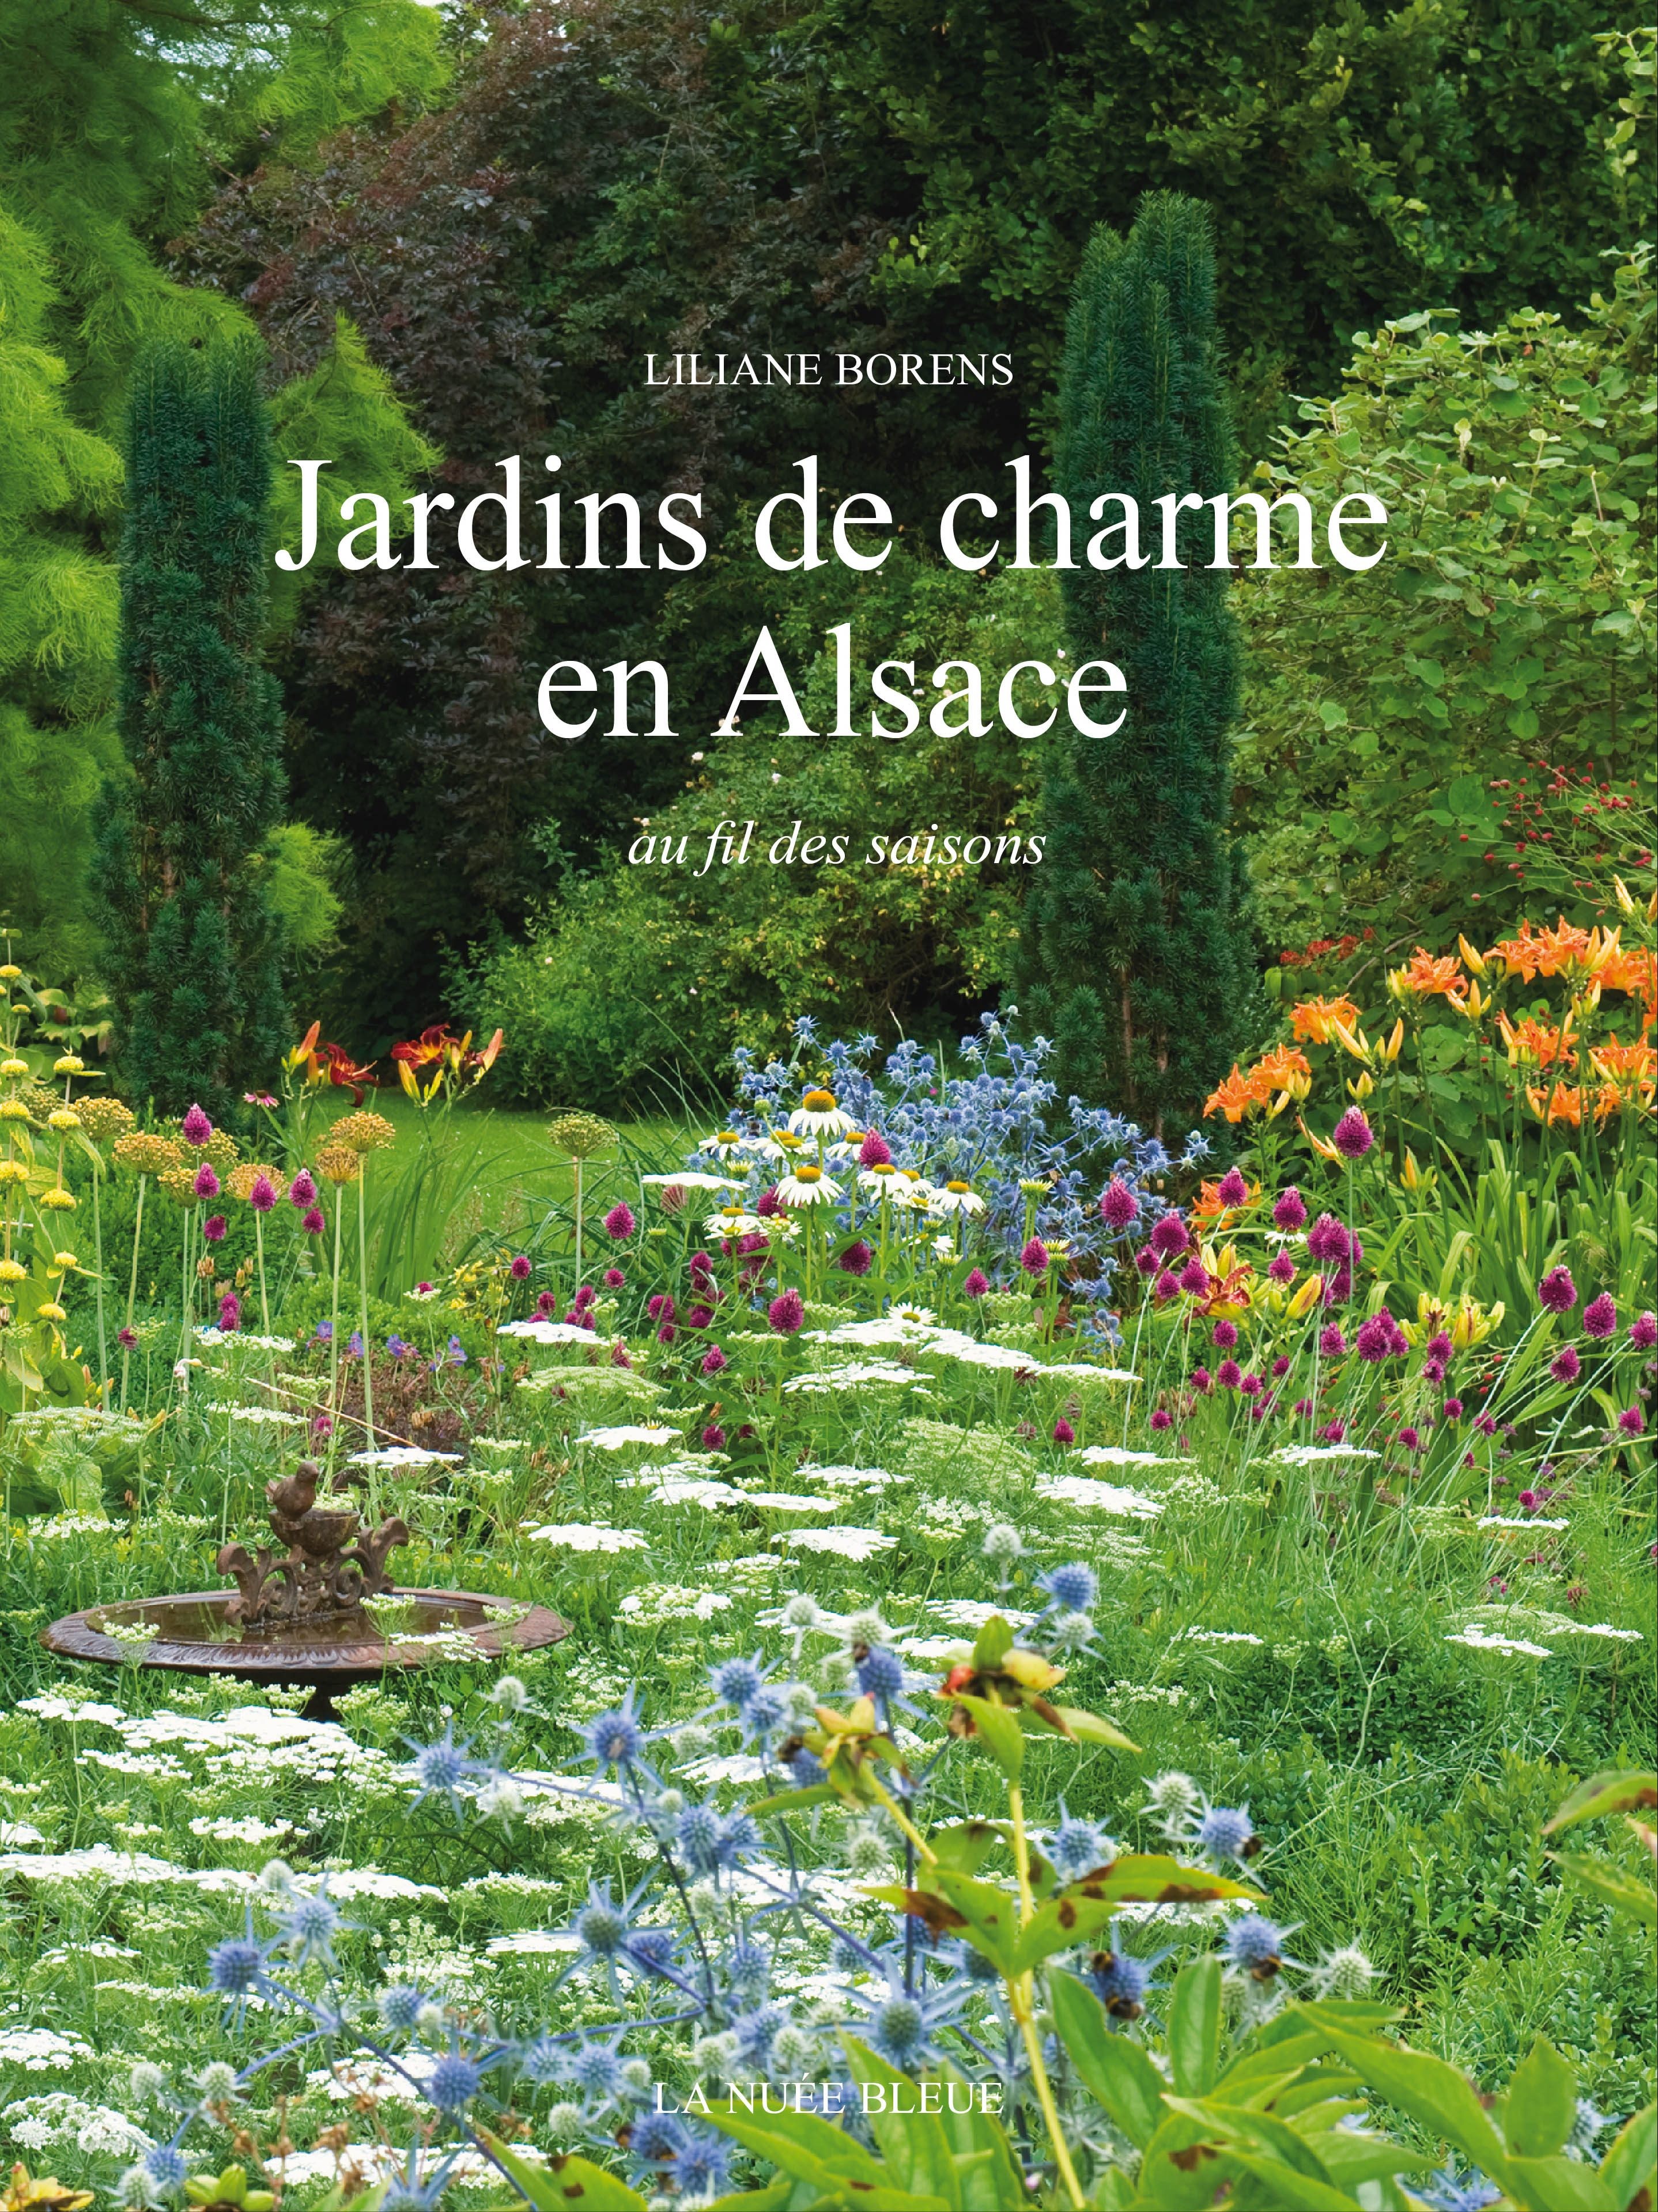 Jardins de charme en Alsace